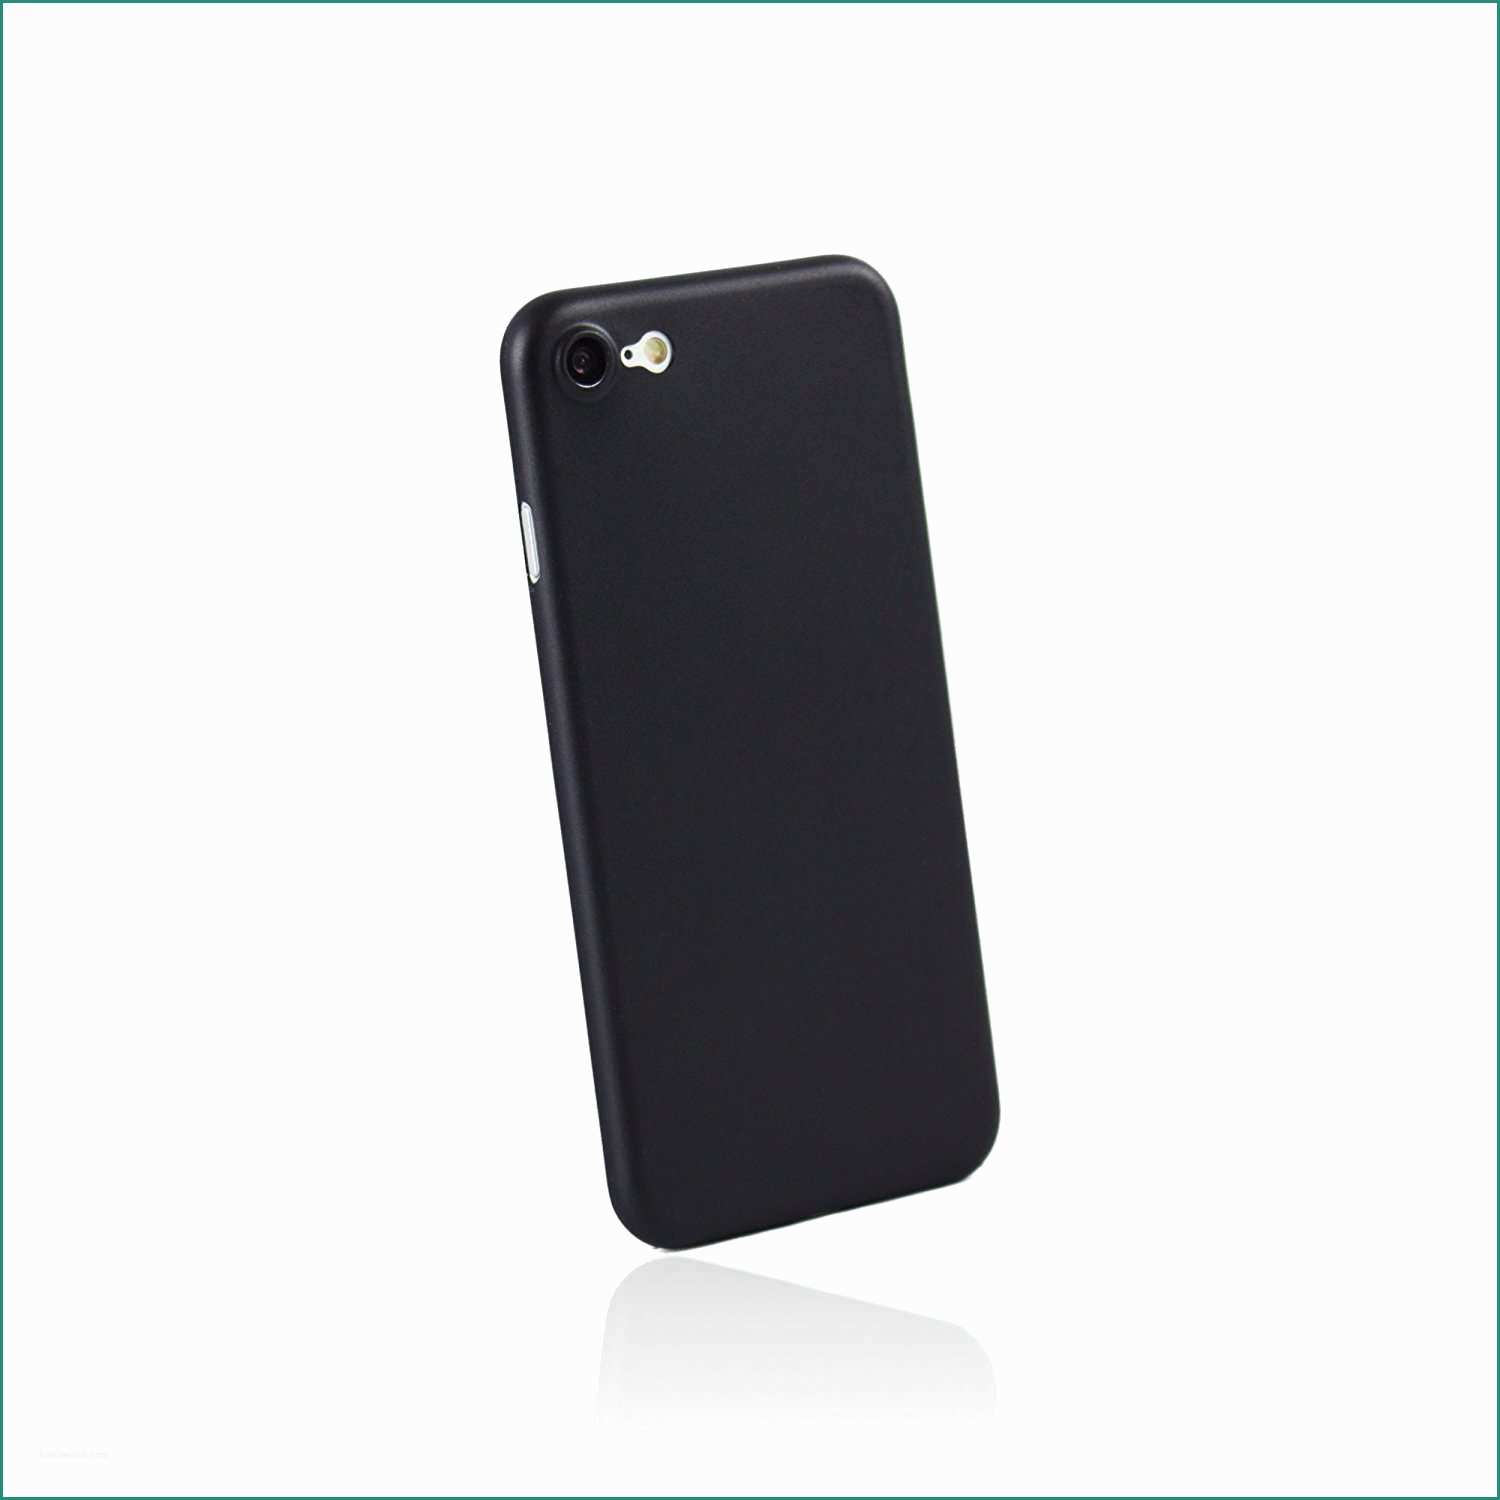 Idee Case Moderne E Ultra Slim Case iPhone 7 Schwarz Jetzt Bei Falkemedia Zum